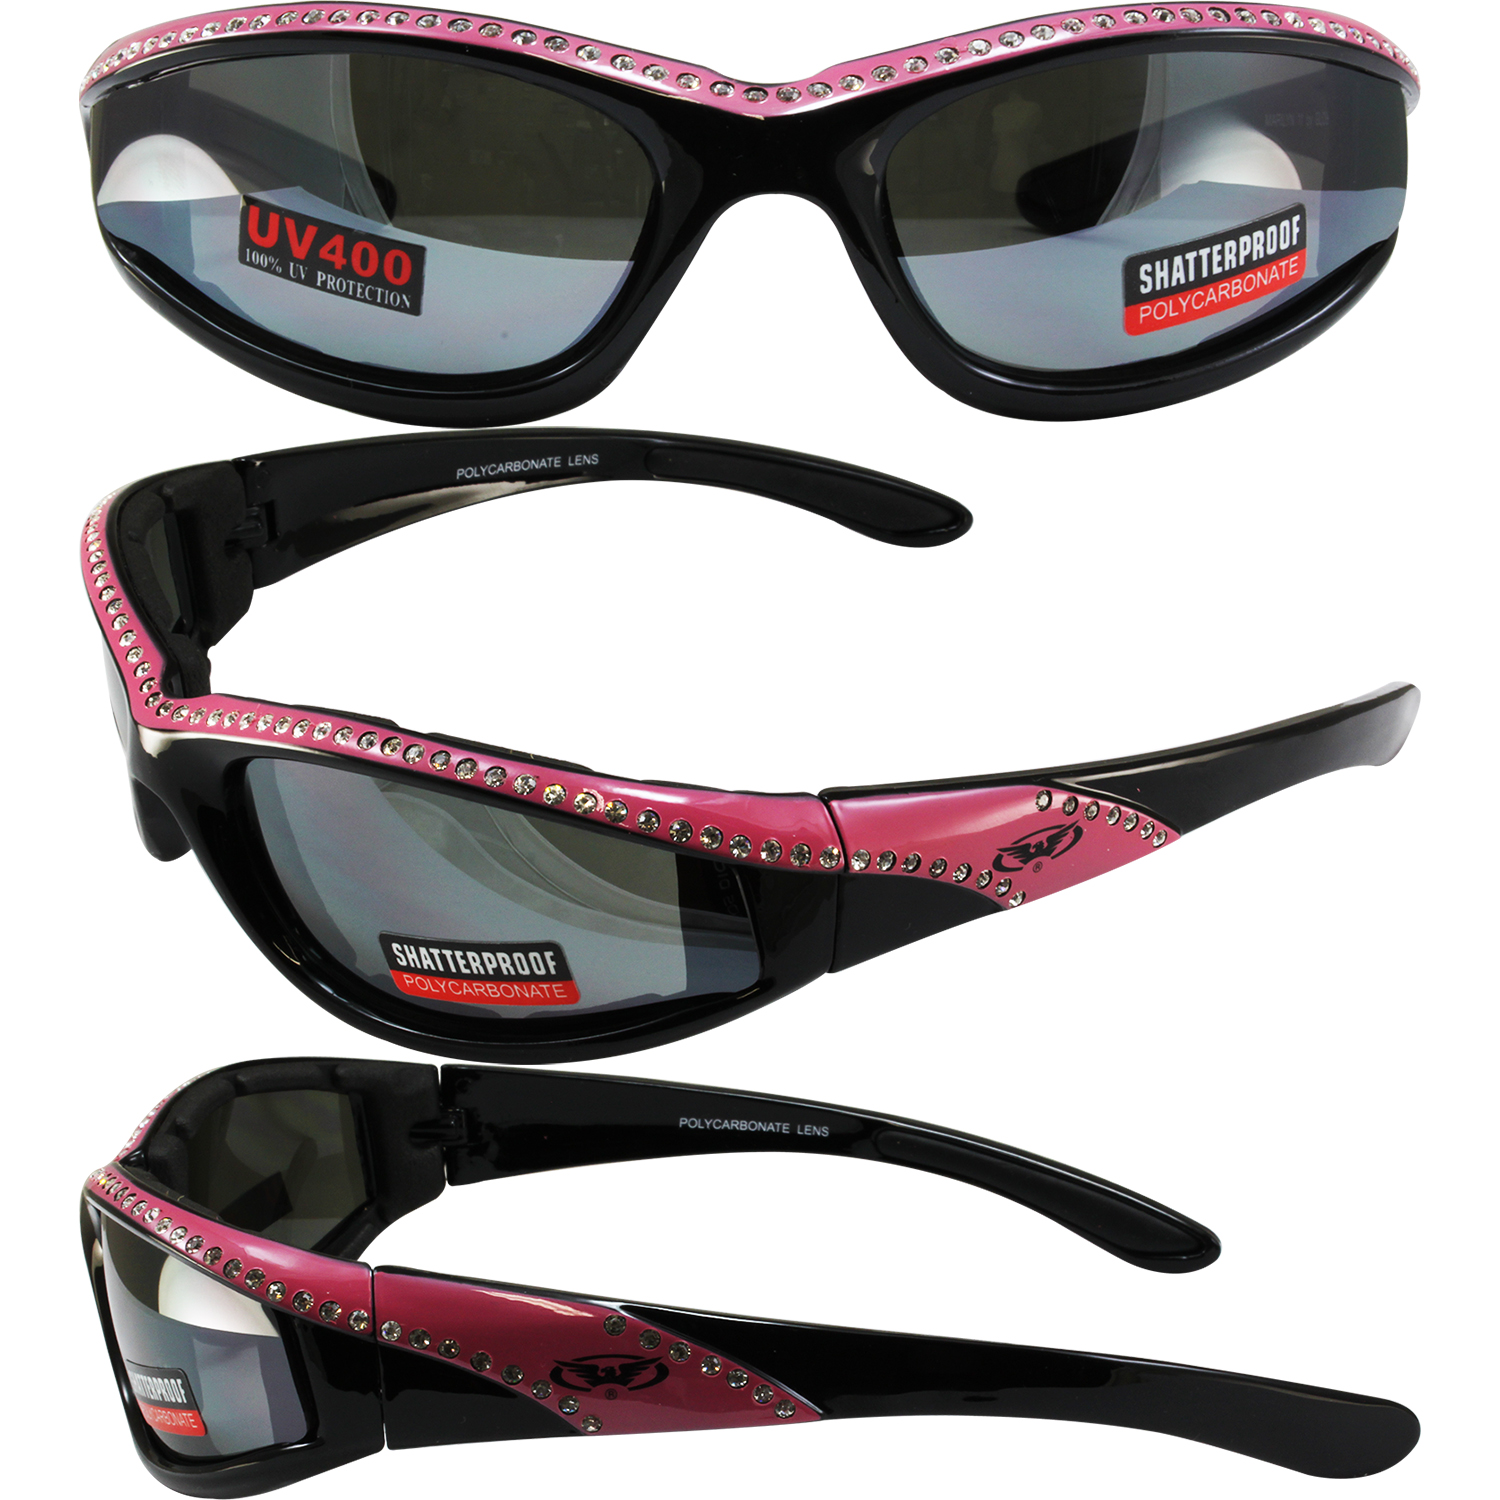 2 Pairs of Global Vision Eyewear Marilyn 11 Women's Black Sunglasses Pink + Orange Stripe Frames Flash Mirror Lenses - image 5 of 9